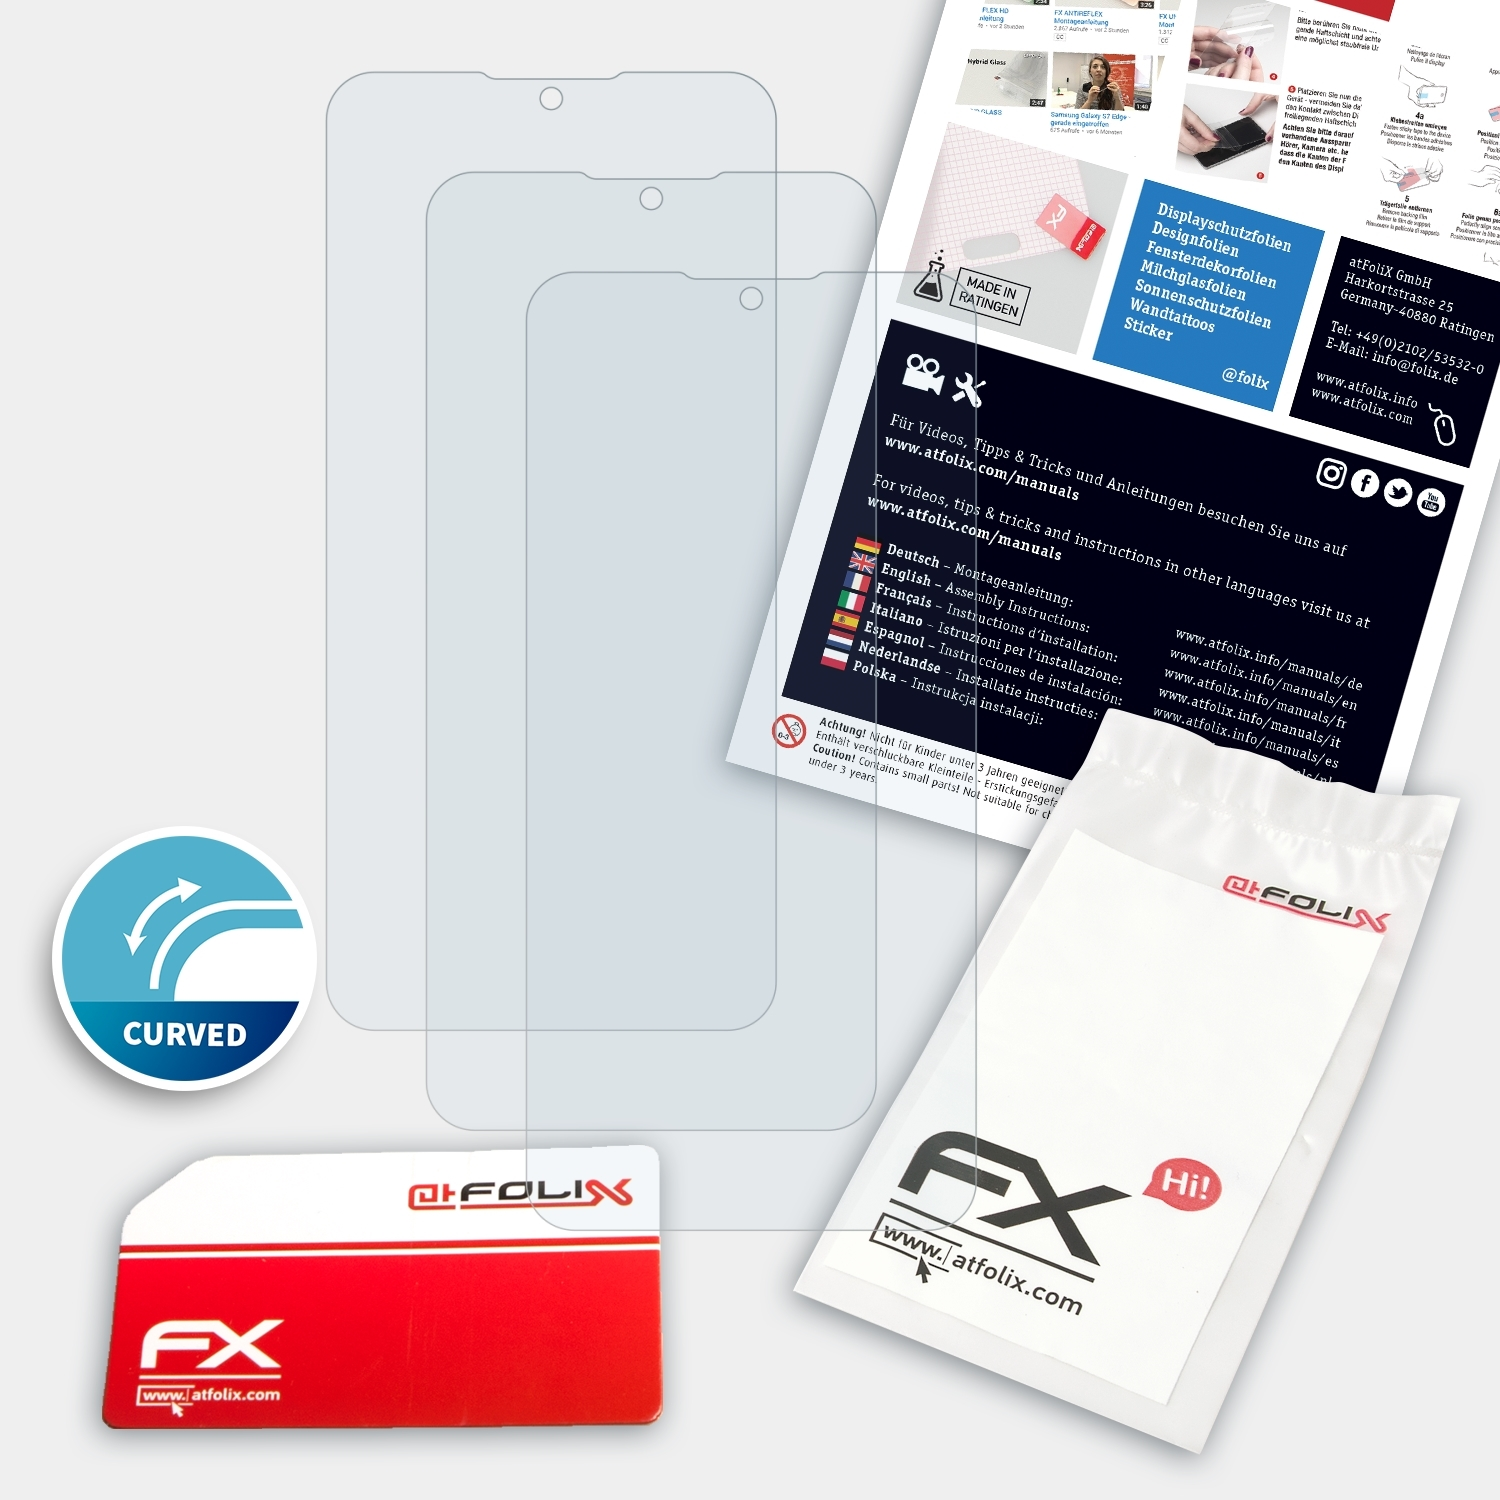 ATFOLIX Mobile Displayschutz(für X6 Plus) FX-ActiFleX 3x Nuu